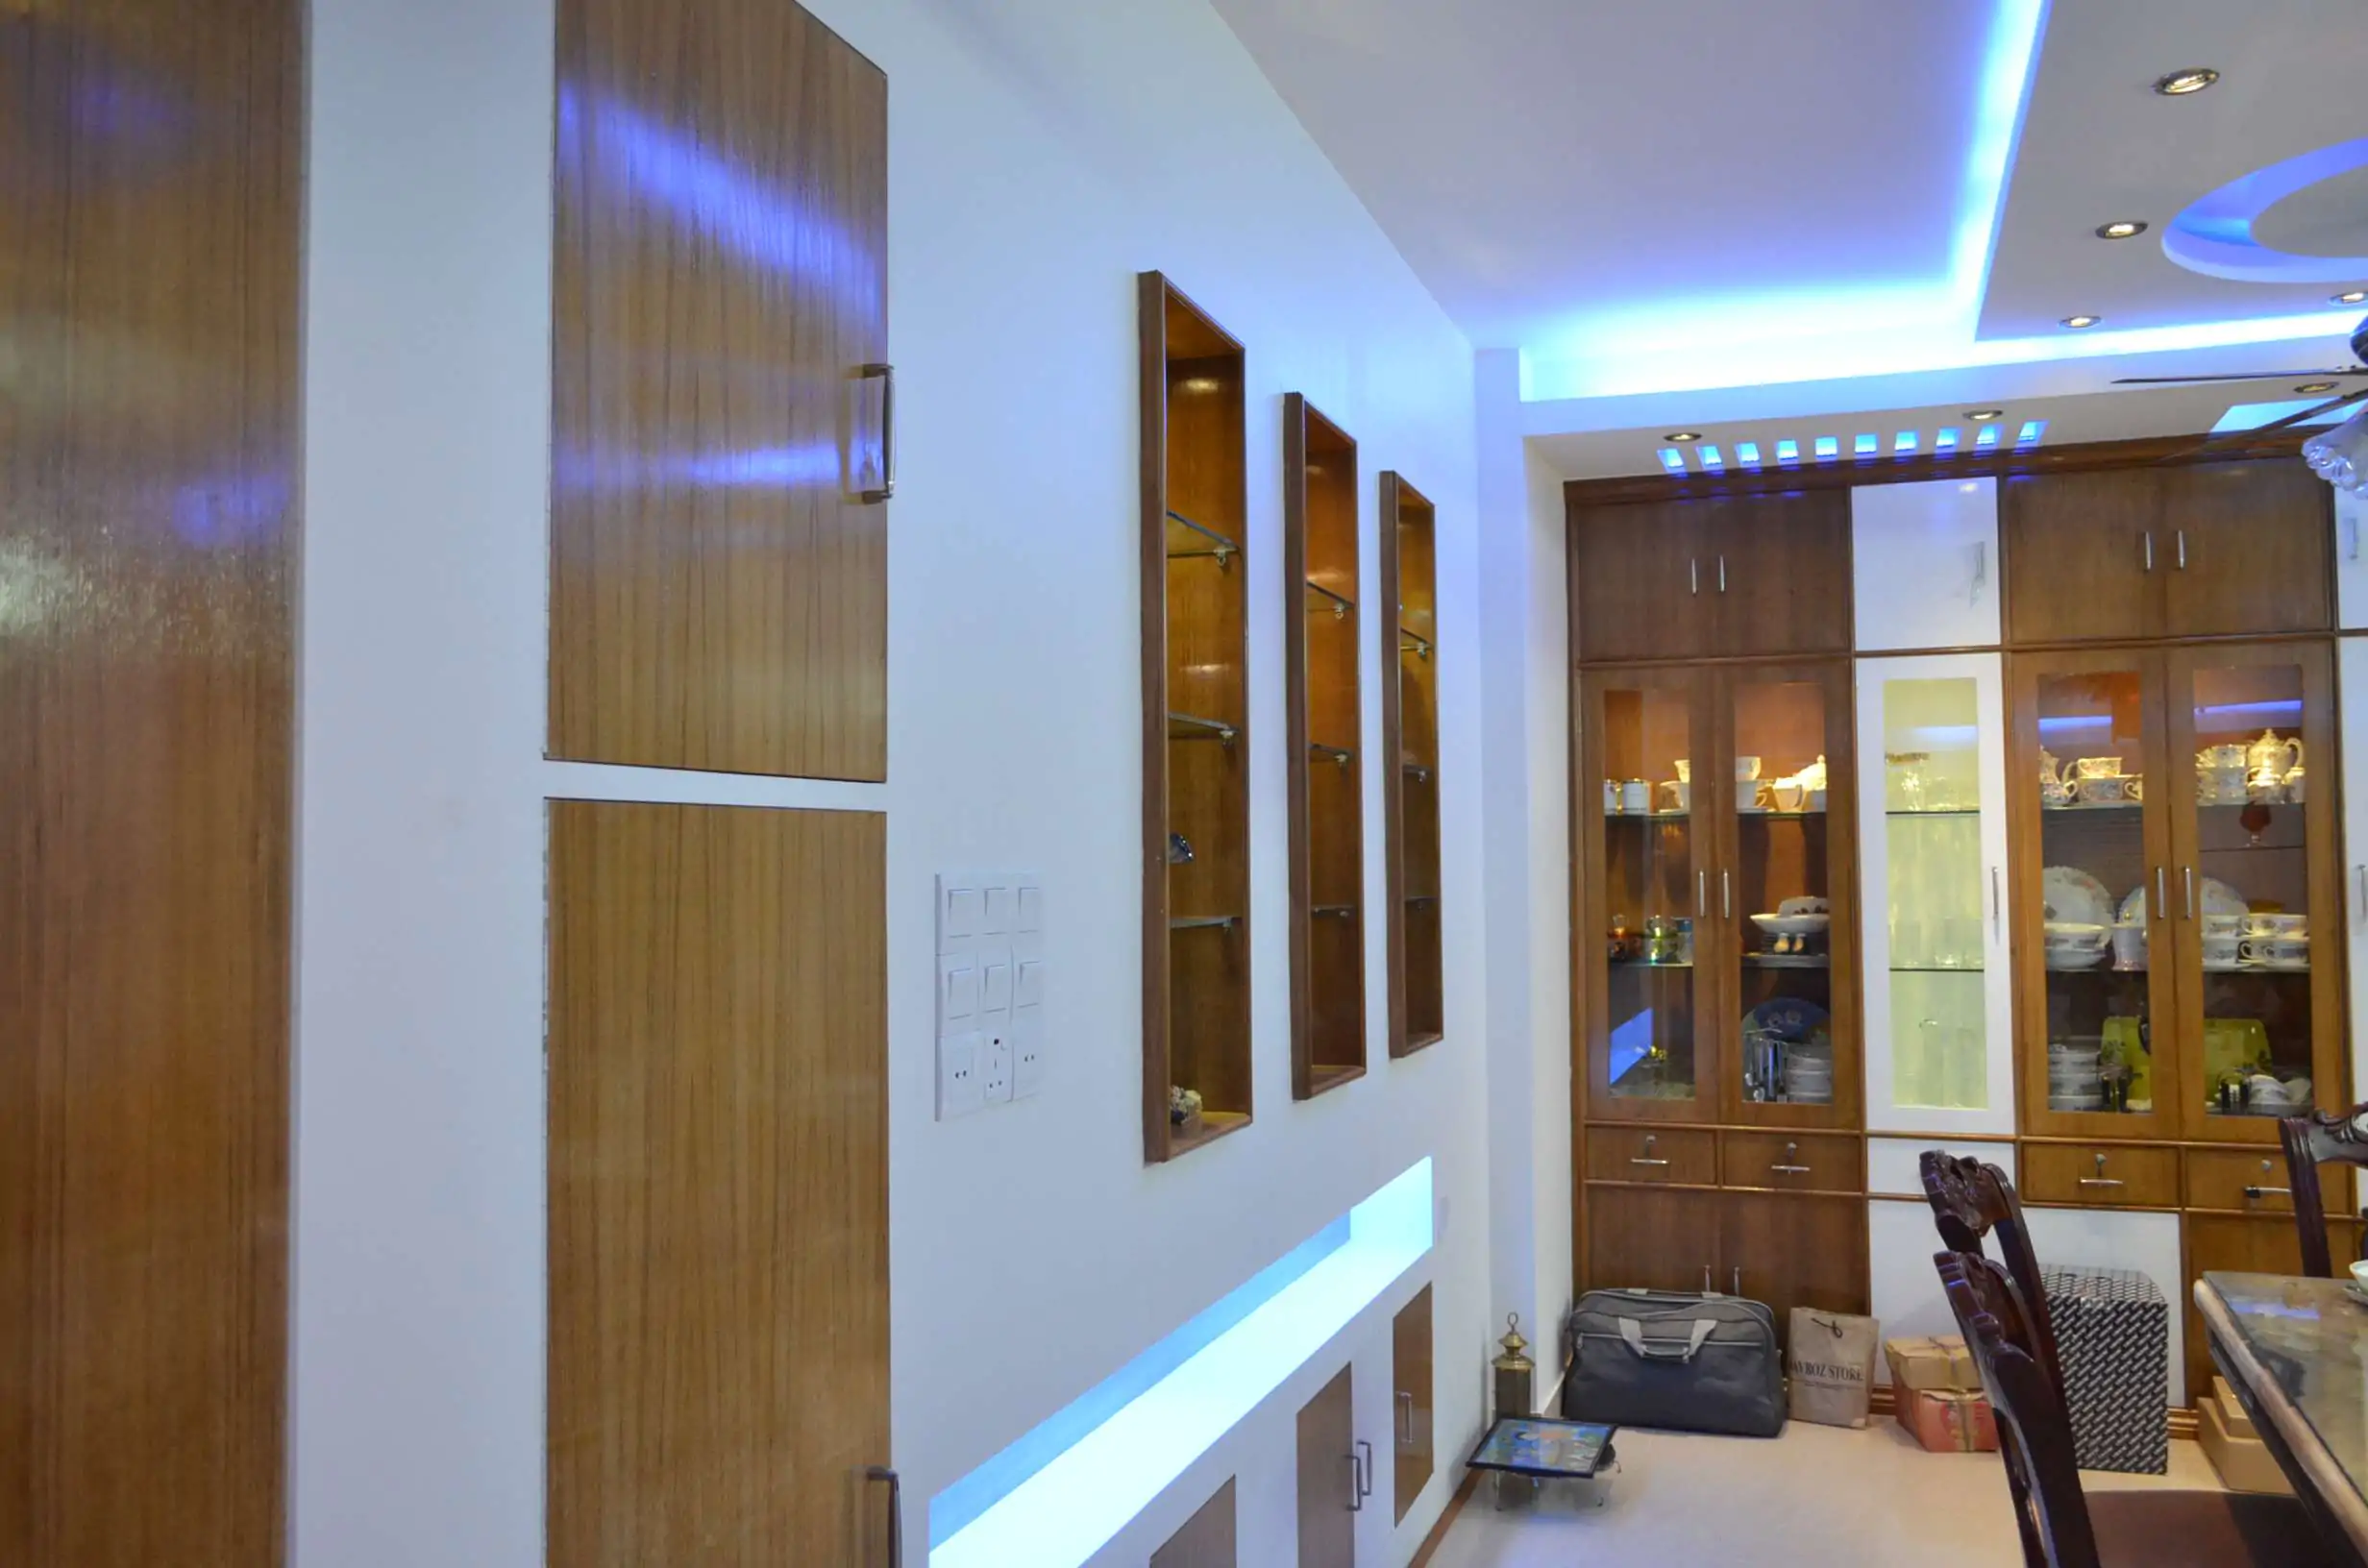 Masud Alam Dhanmondi Complete Project Home Interior Design (15)